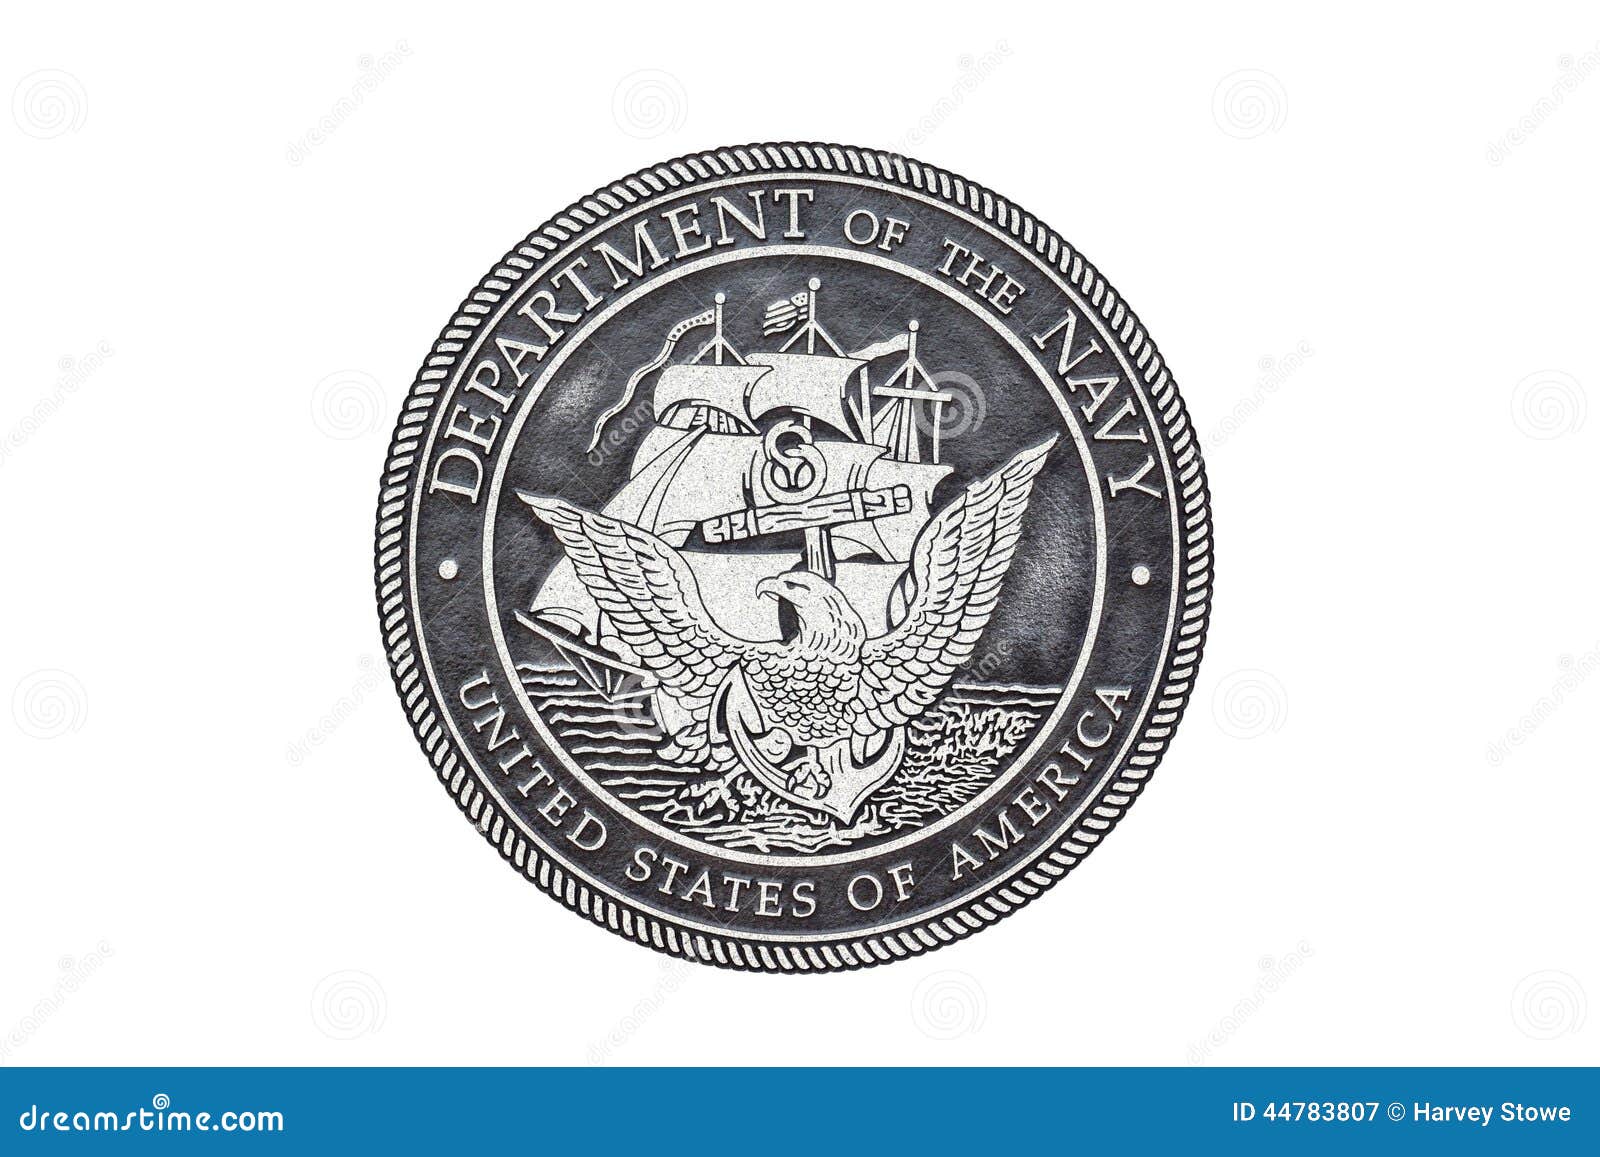 u.s. navy official seal